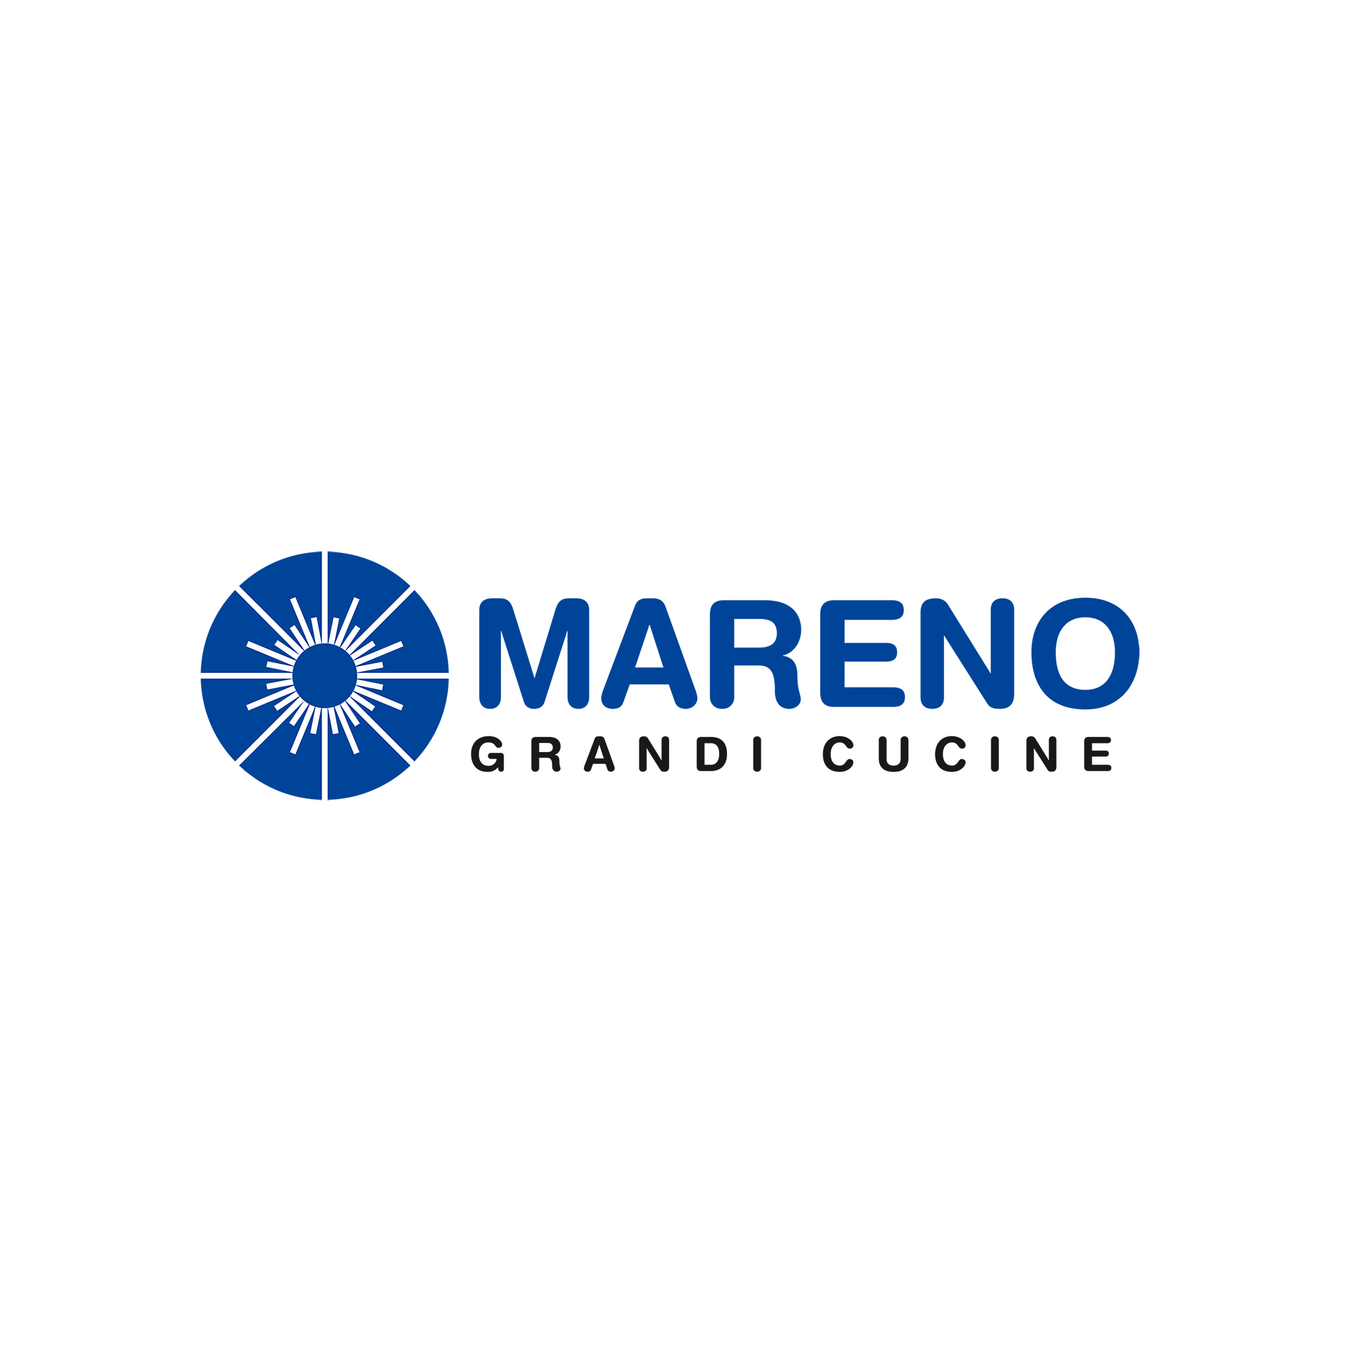 Mareno - Gecko Catering Equipment